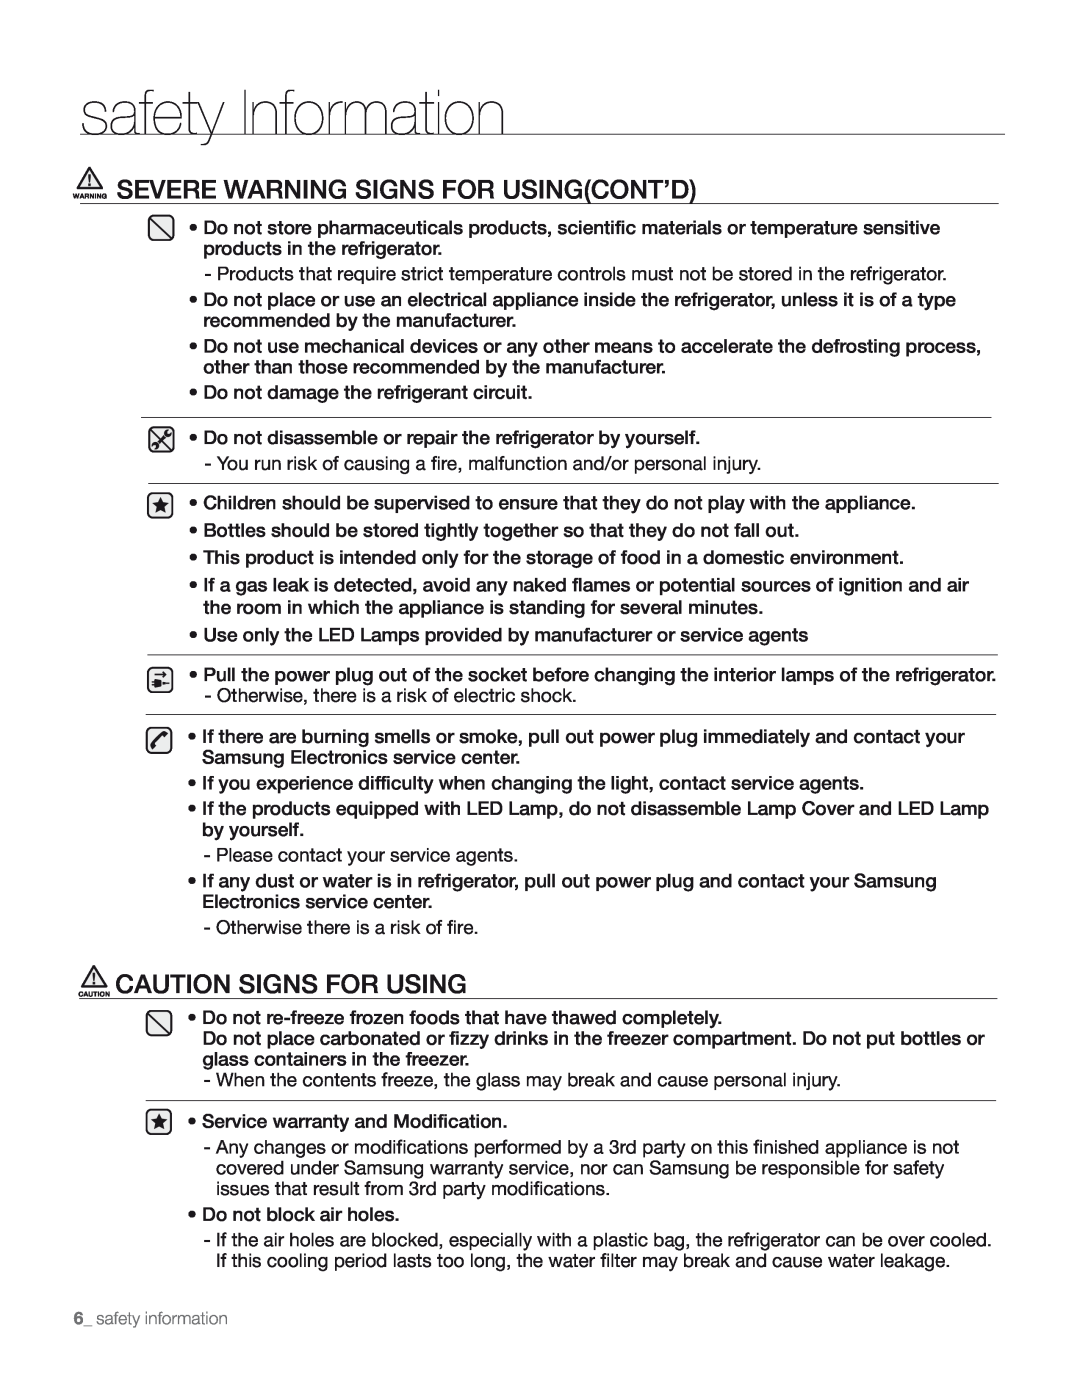 Samsung DA68-01890M Warning Severe Warning Signs For Usingcont’D, Caution Caution Signs For Using, safety Information 